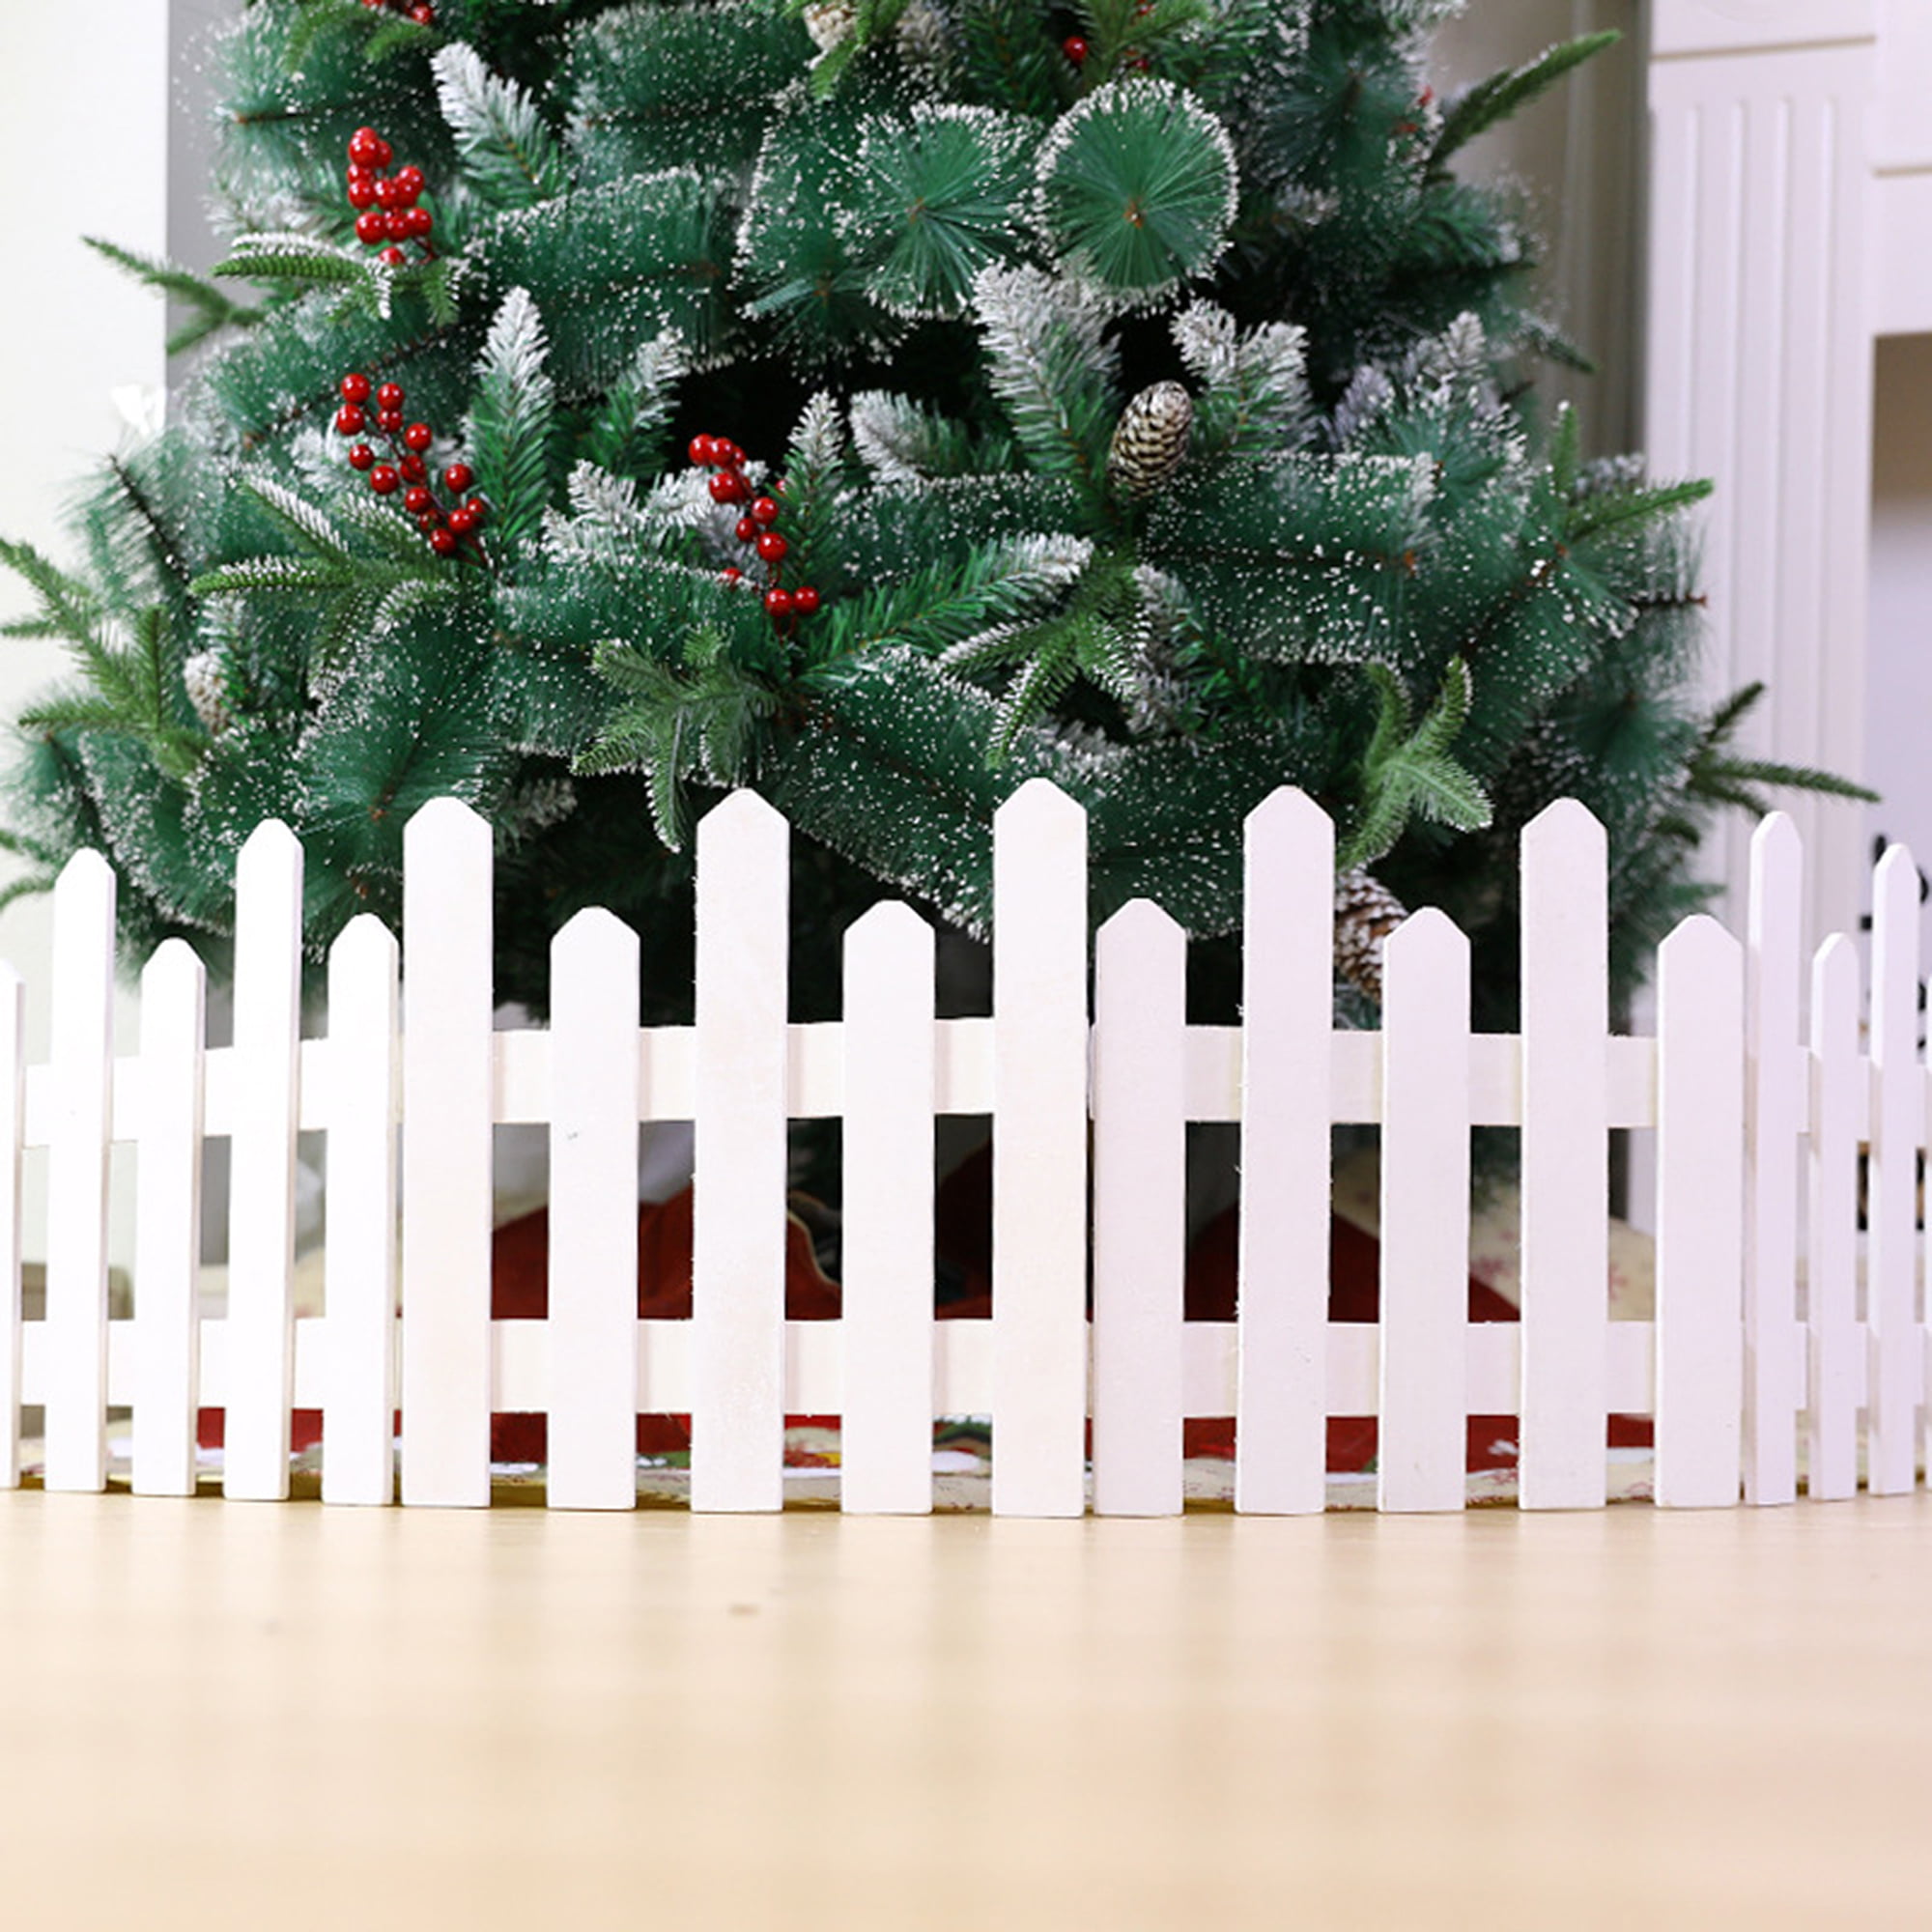 US Miniature Home Garden Christmas Xmas Tree Decoractive Wooden Picket Fence